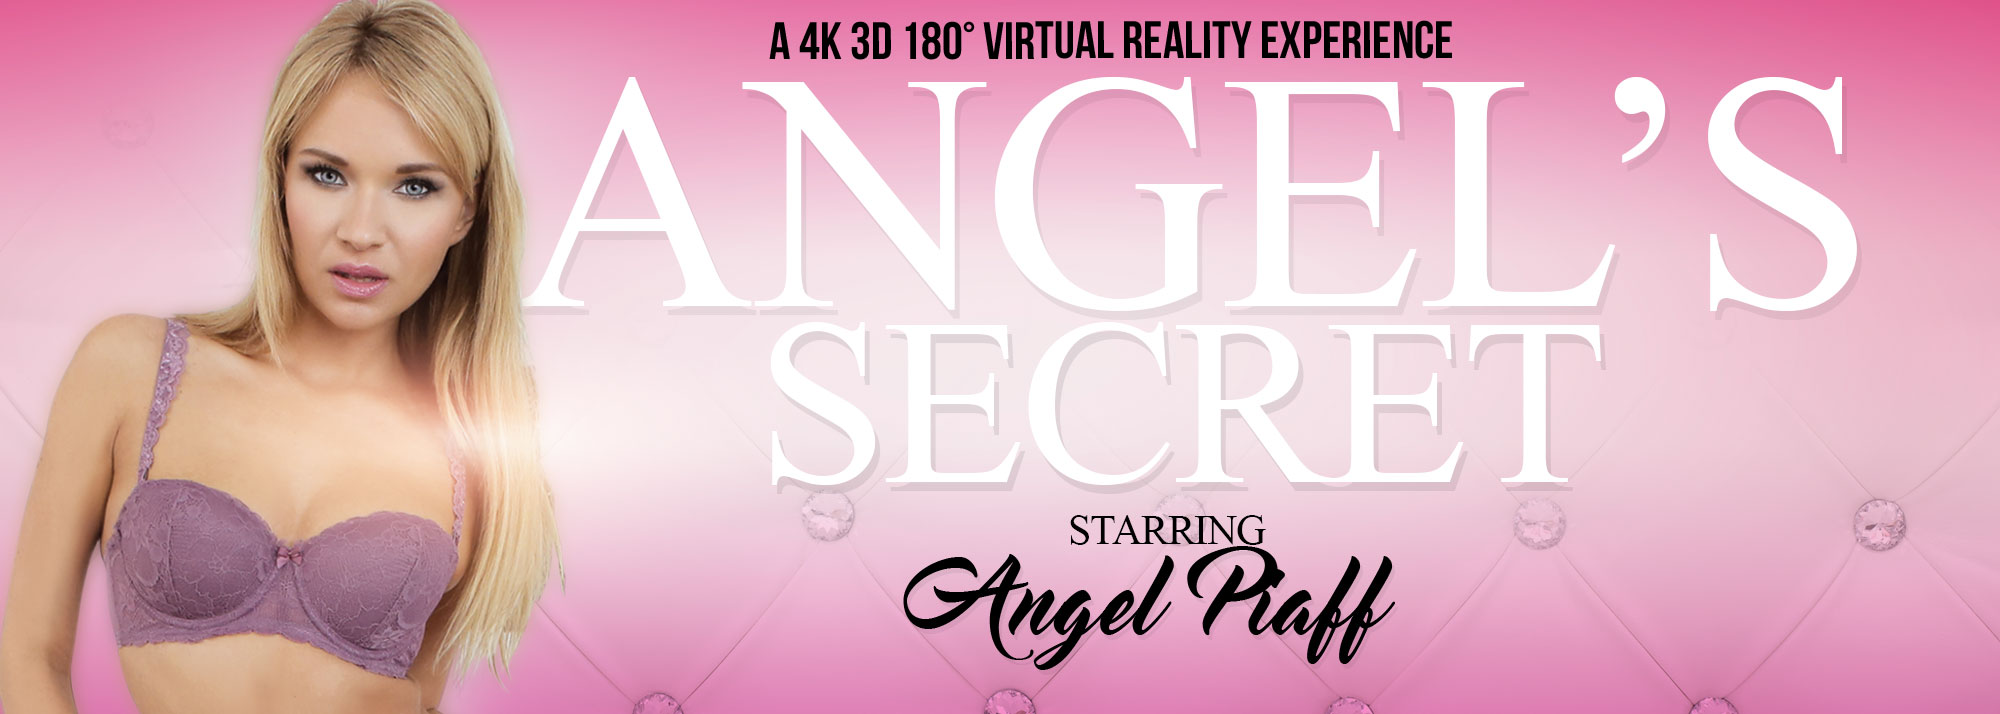 Angel's Secret - VR Porn Video, Starring: Angel Piaff